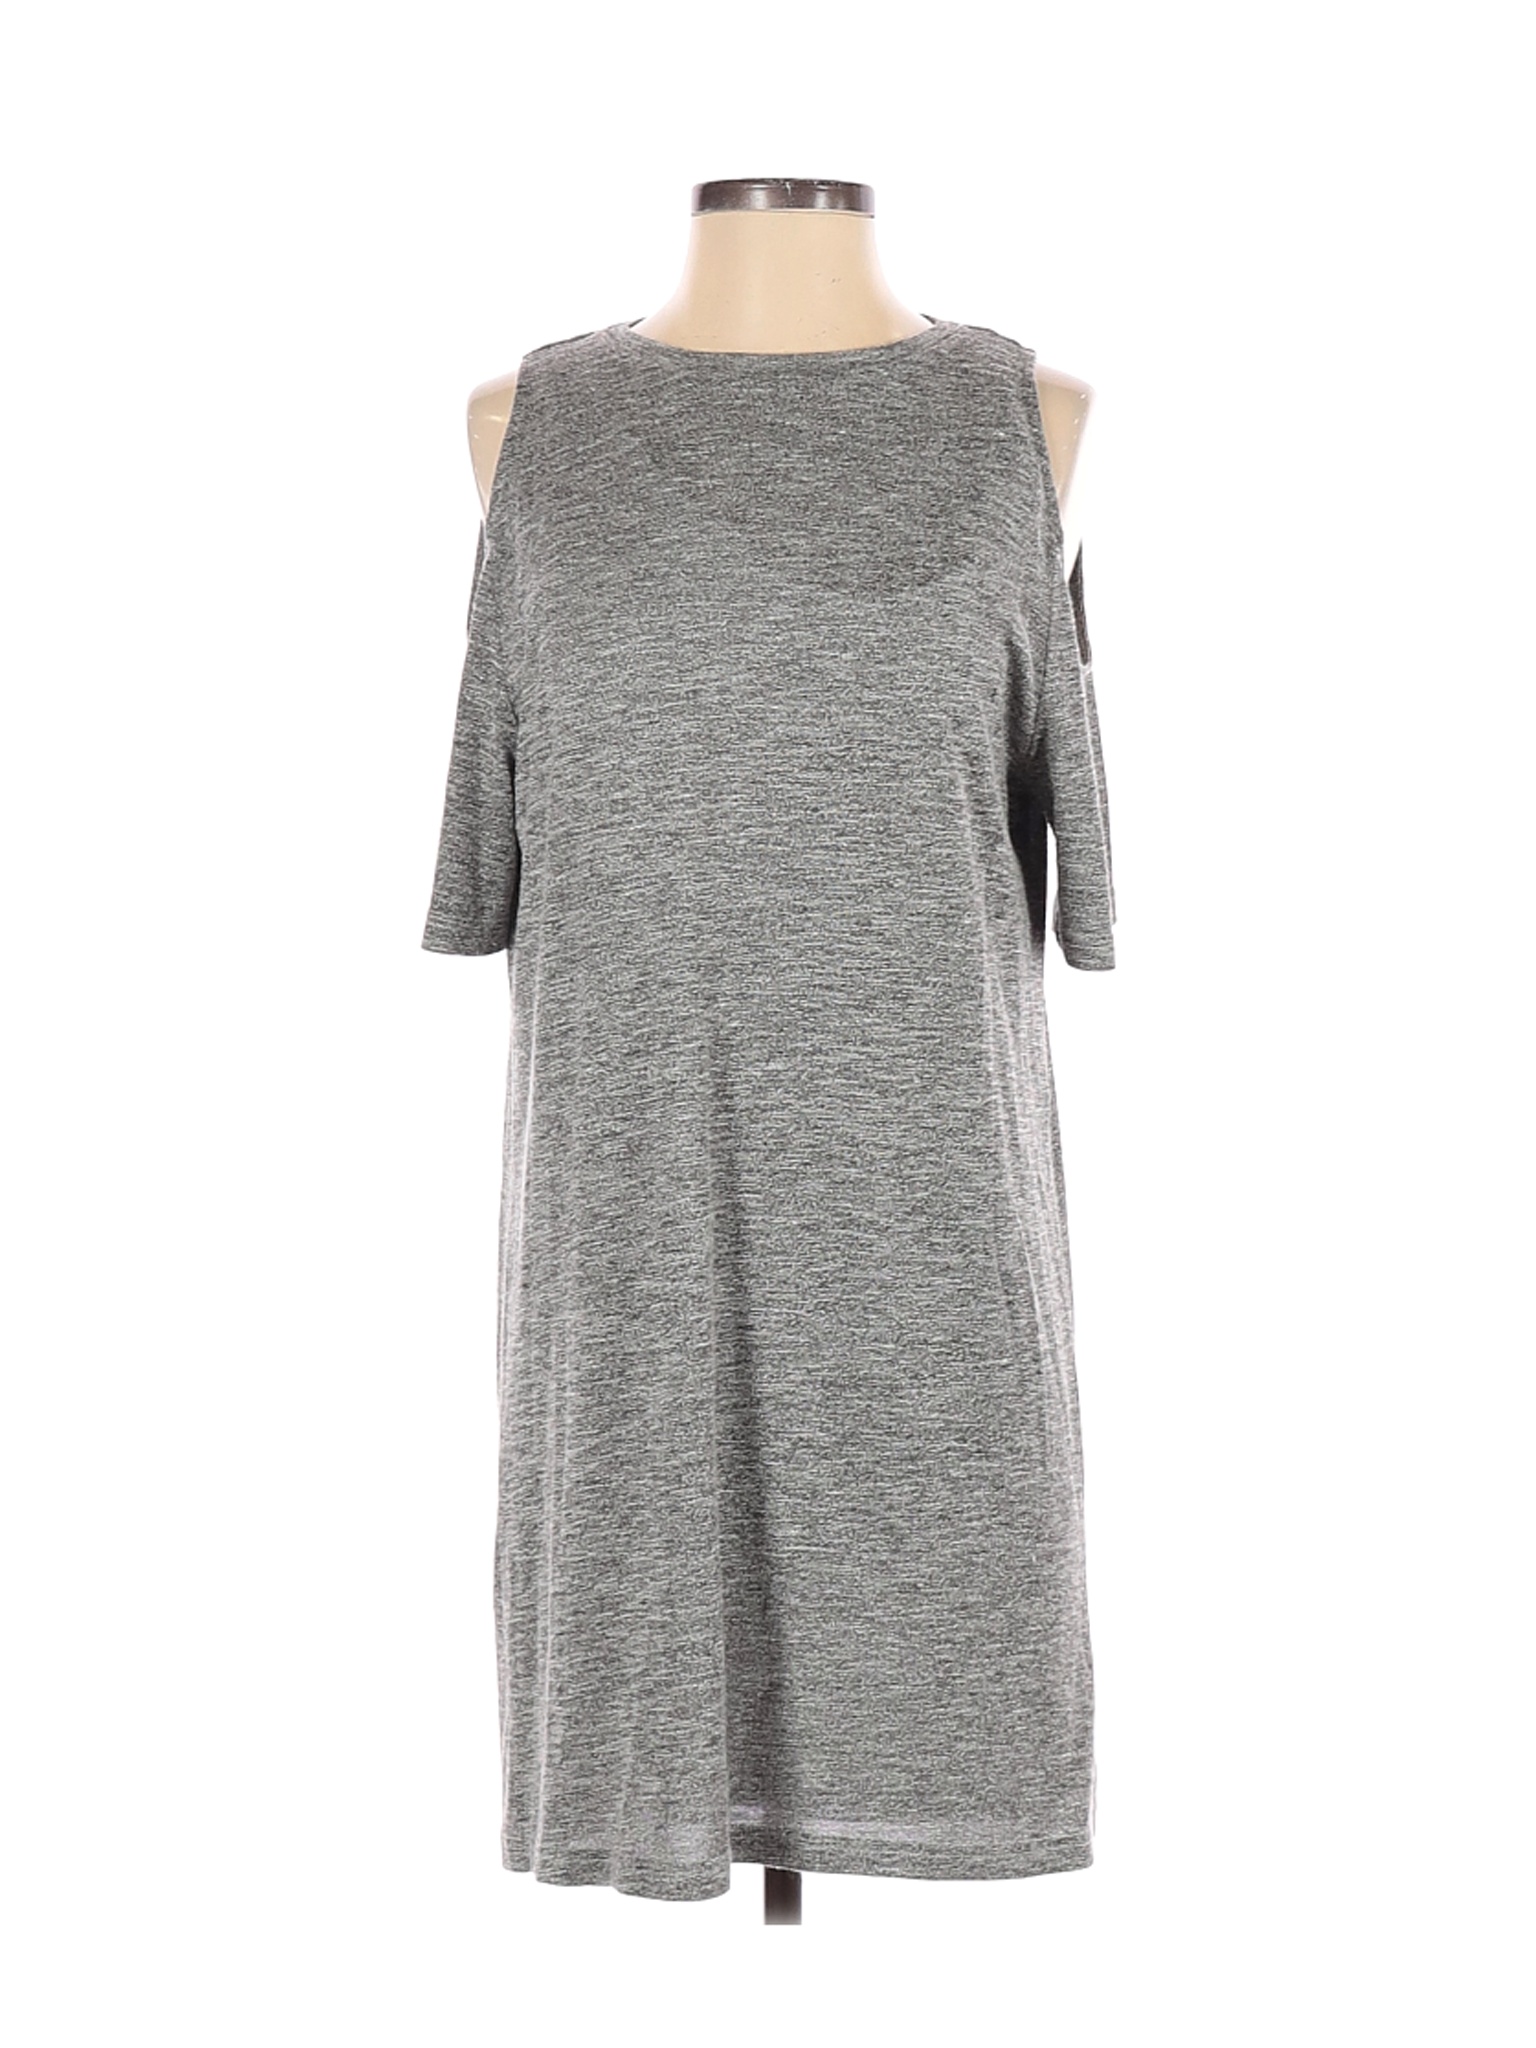 The Fifth Label Women Gray Casual Dress S | eBay